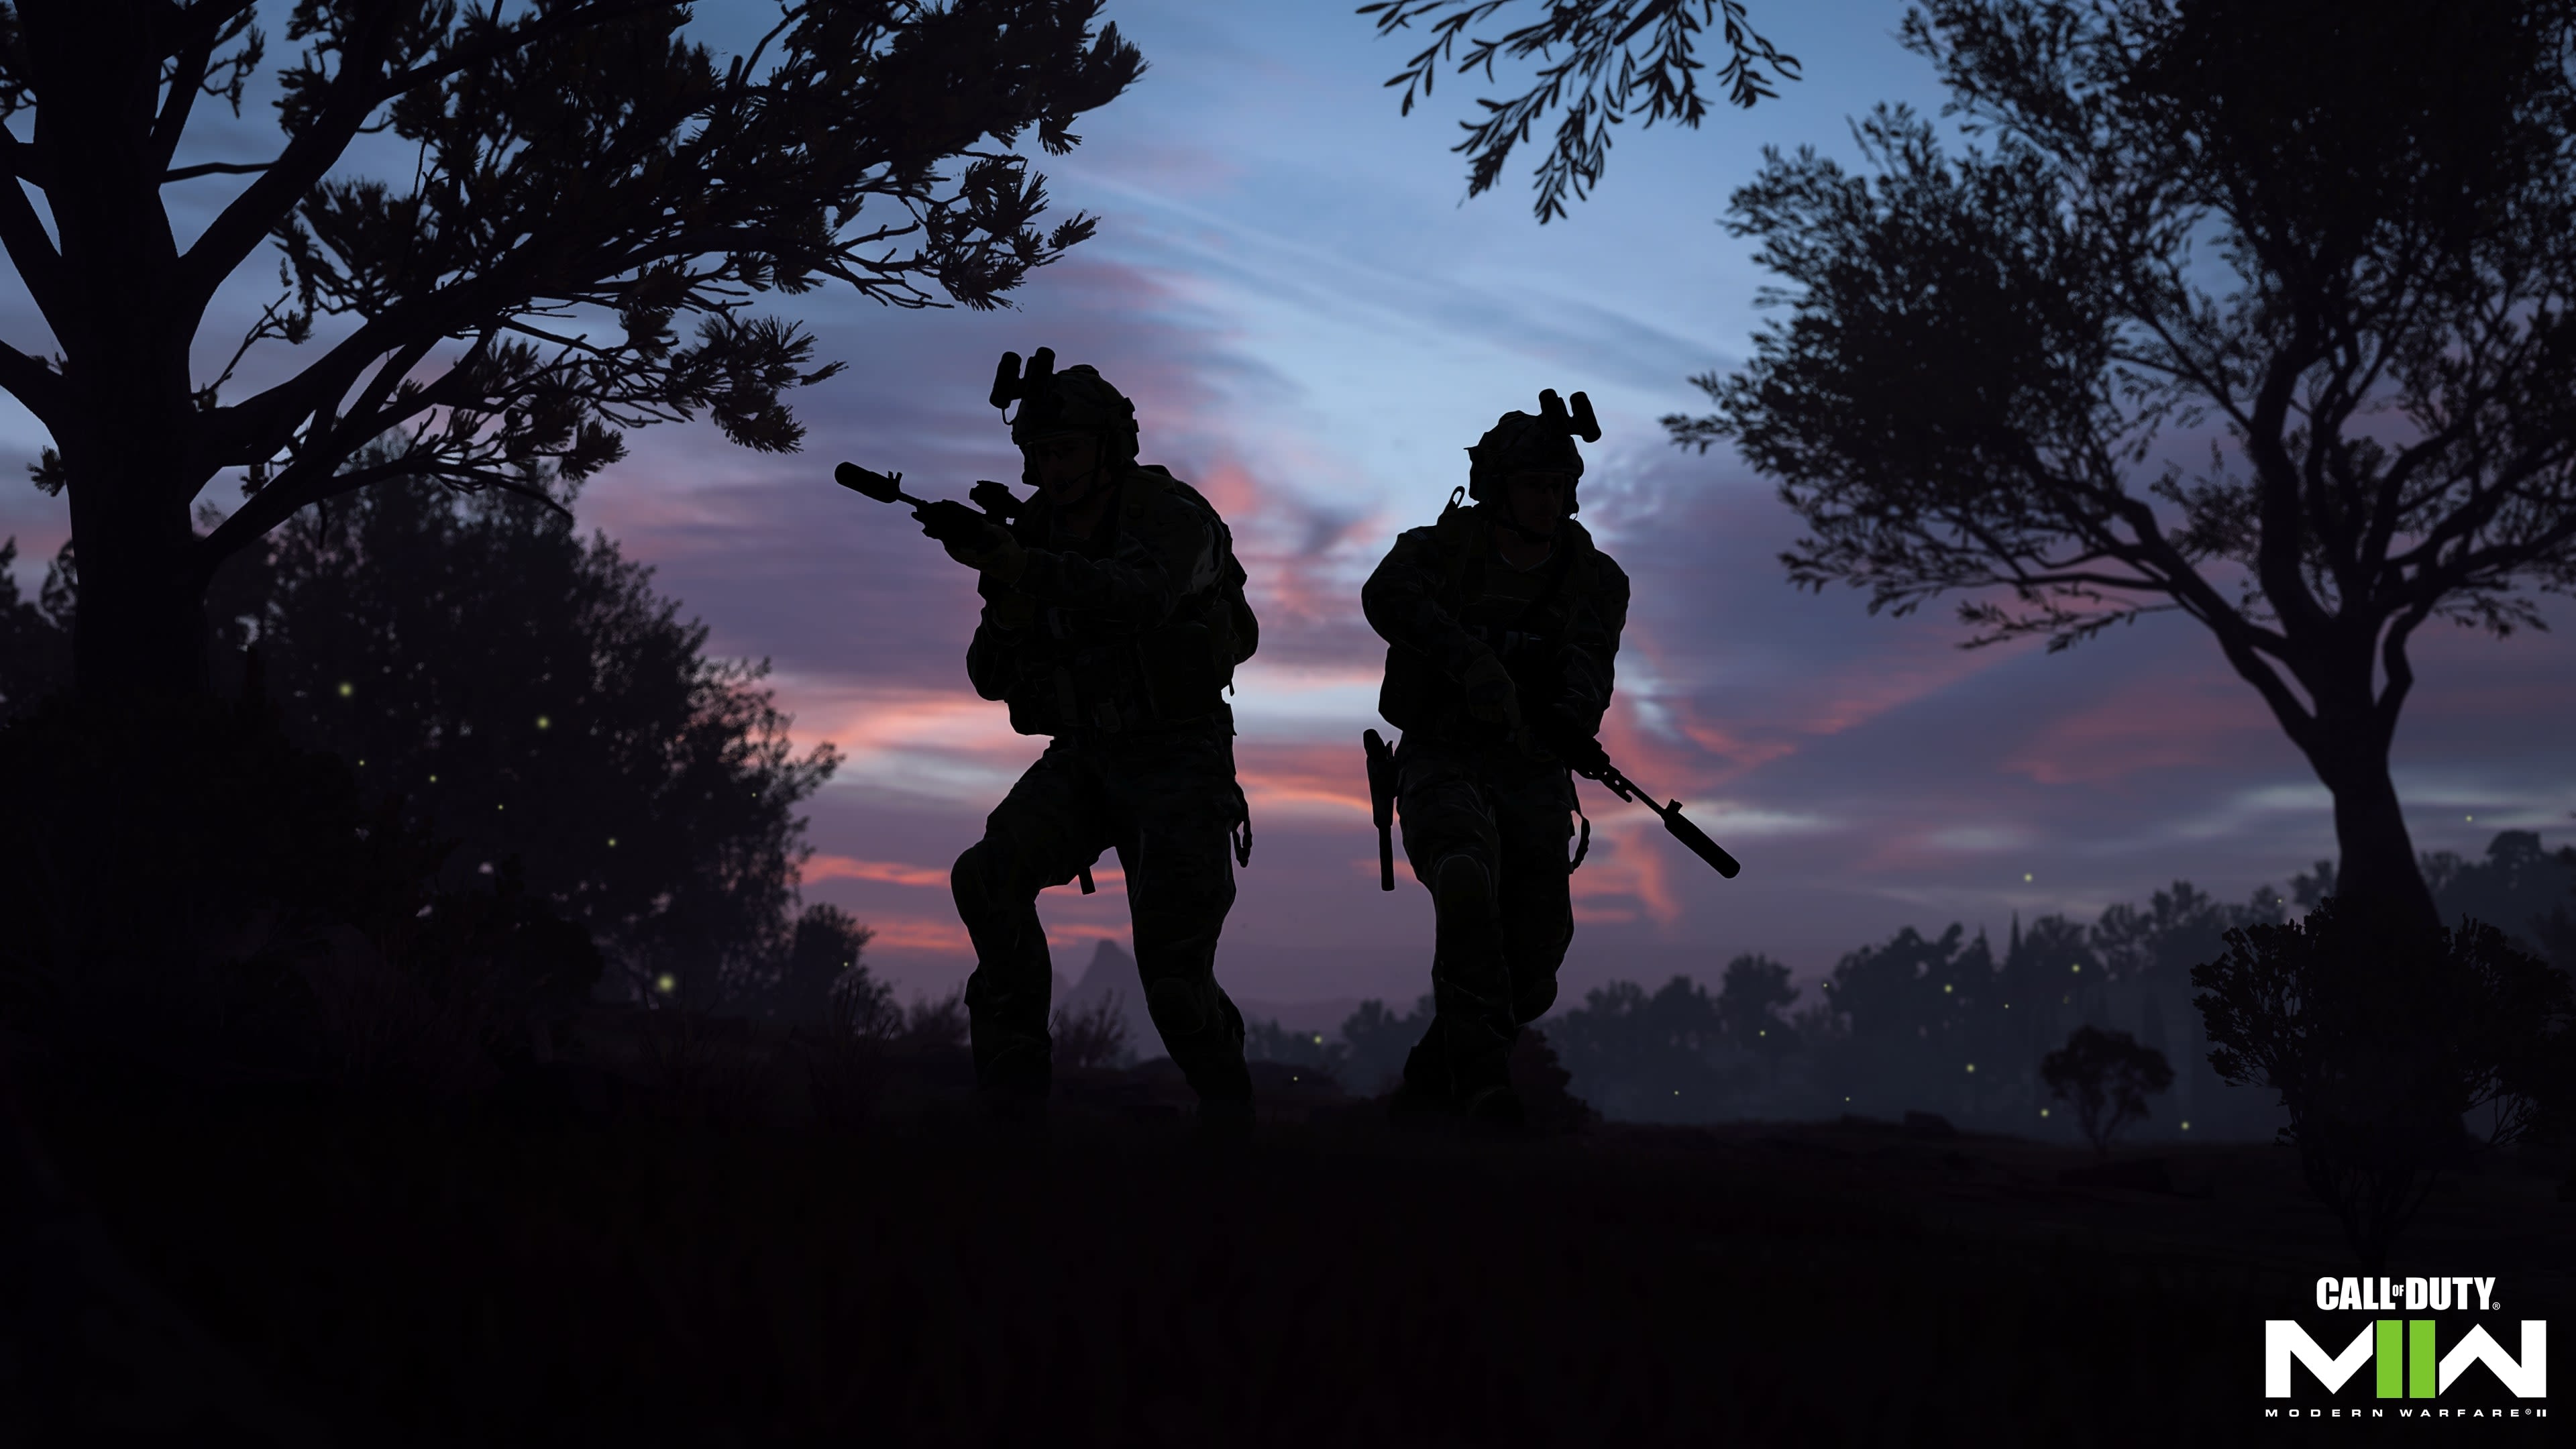 Call of Duty Modern Warfare II Campaign - Review